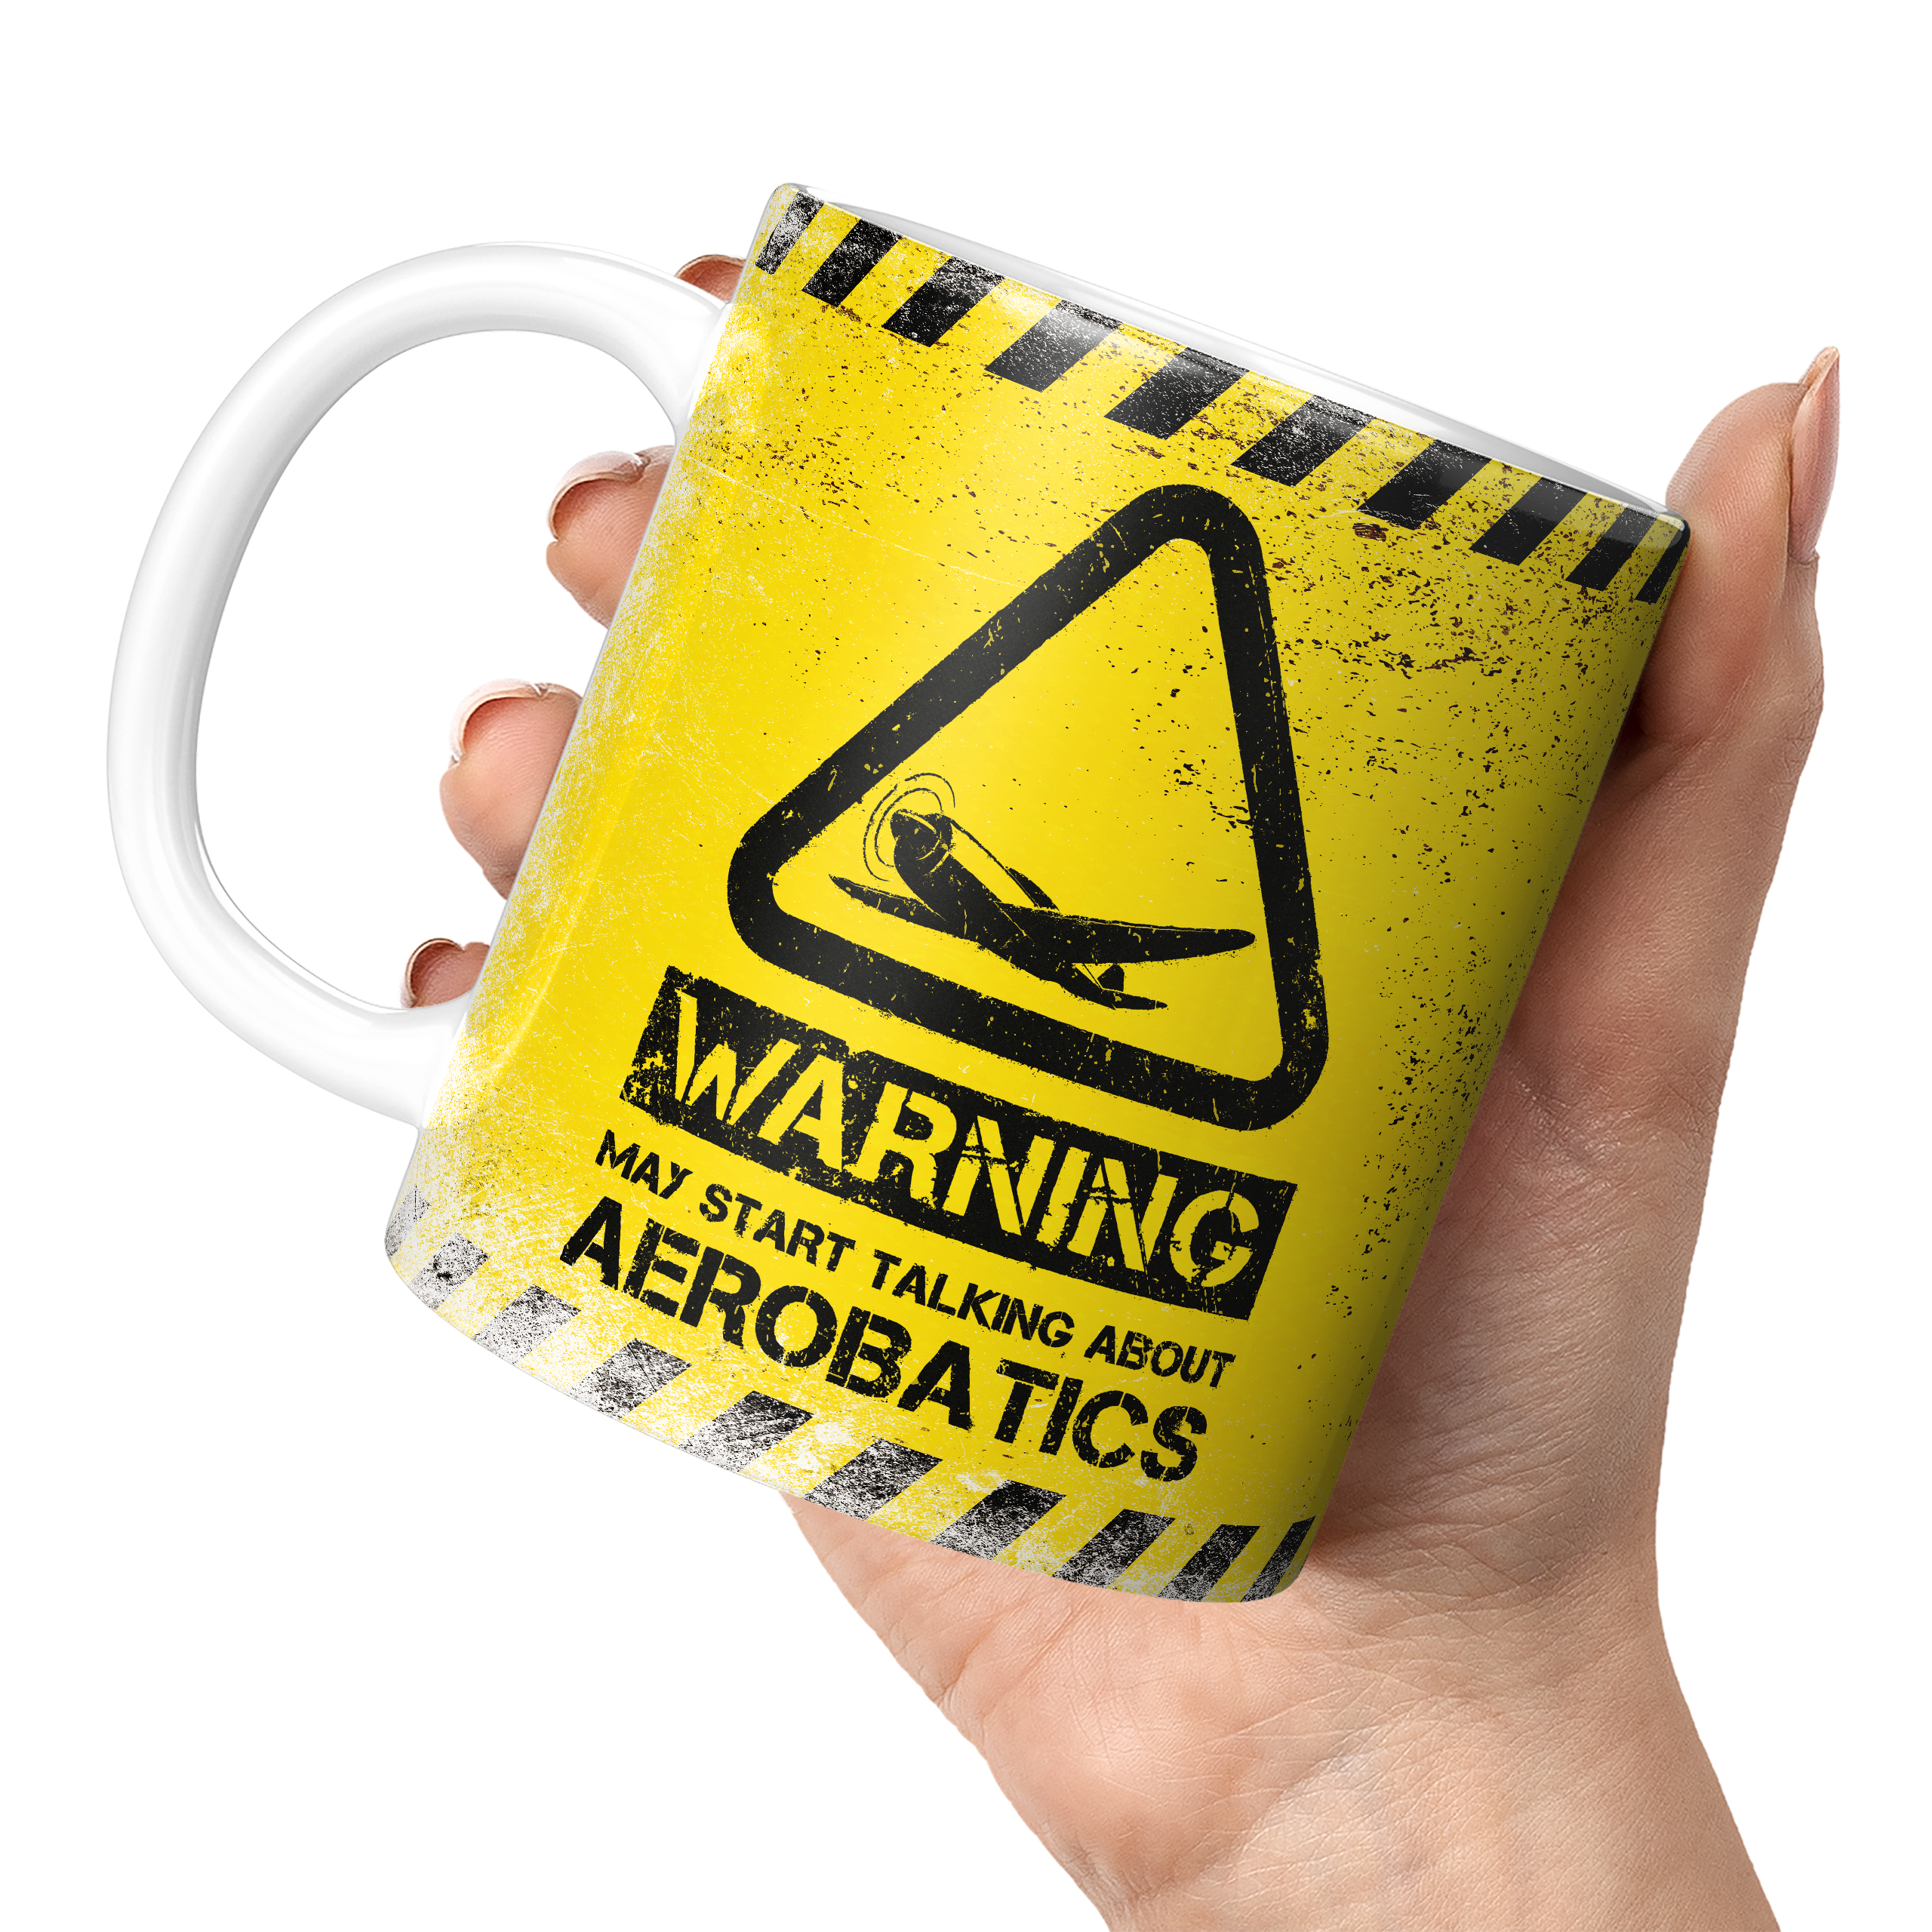 WARNING MAY START TALKING ABOUT AEROBATICS 11oz NOVELTY MUG Mugs